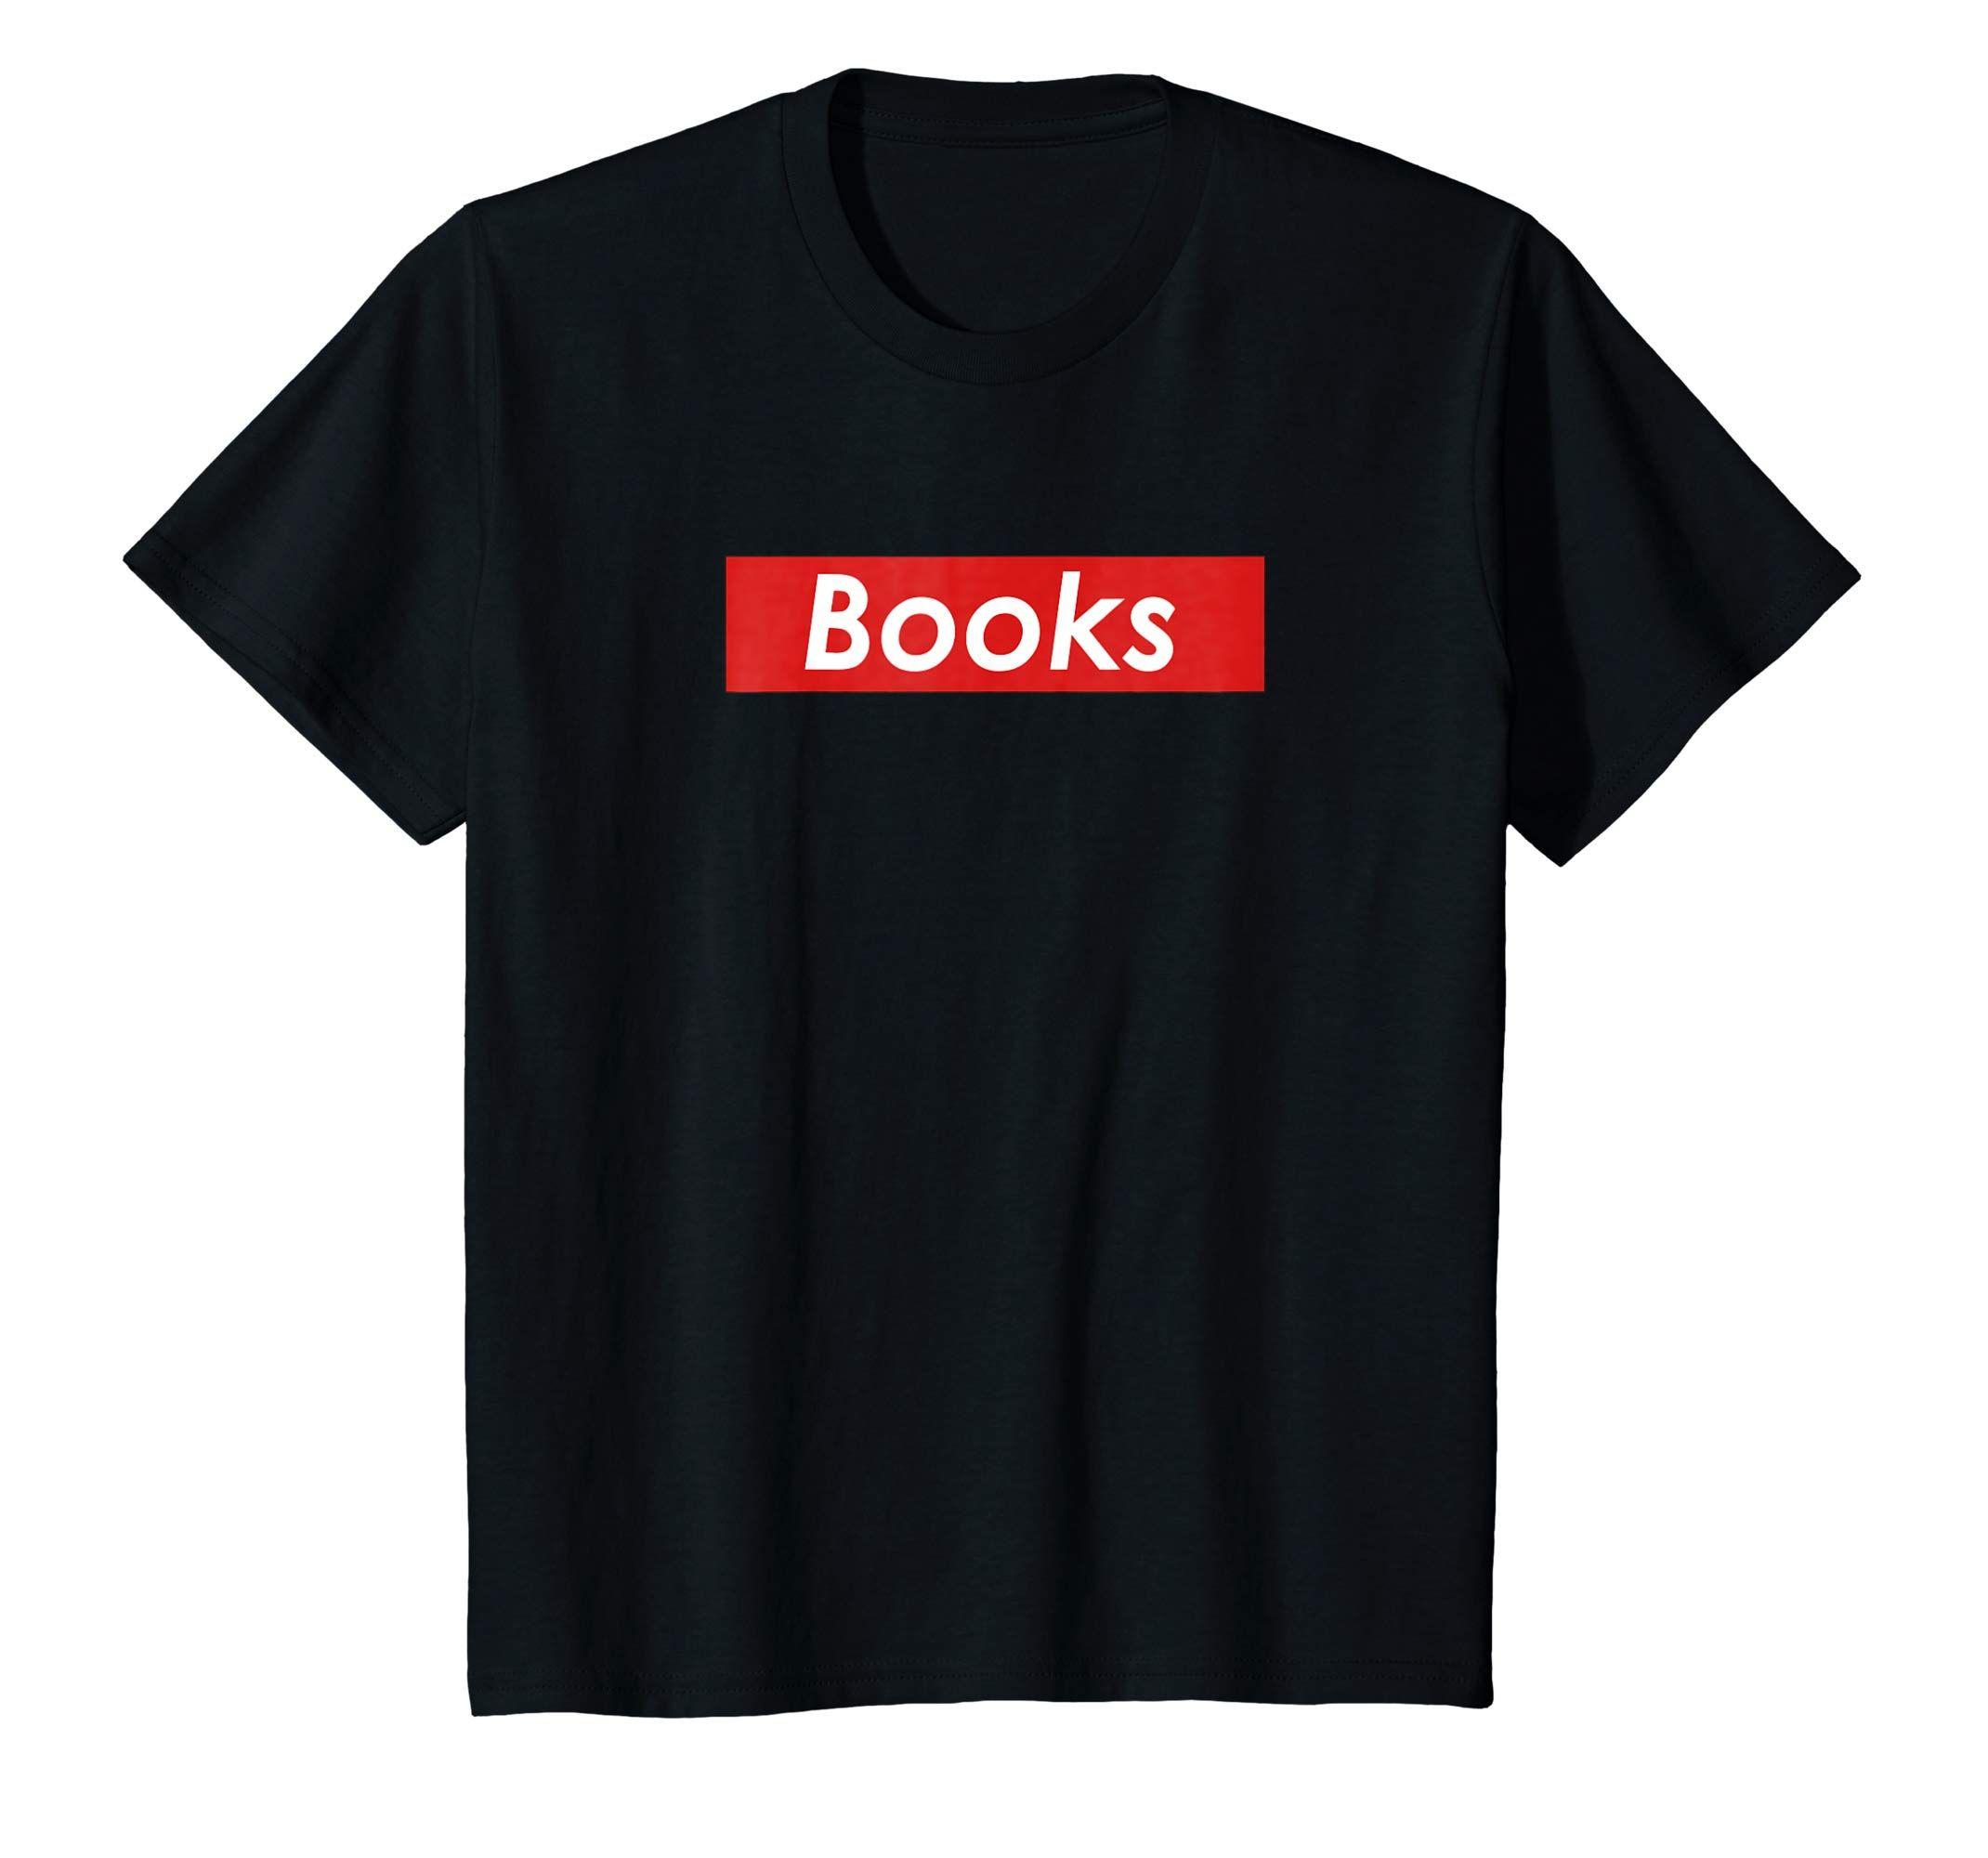 Read Box Logo - Amazon.com: Books Box Logo T-Shirt: Clothing